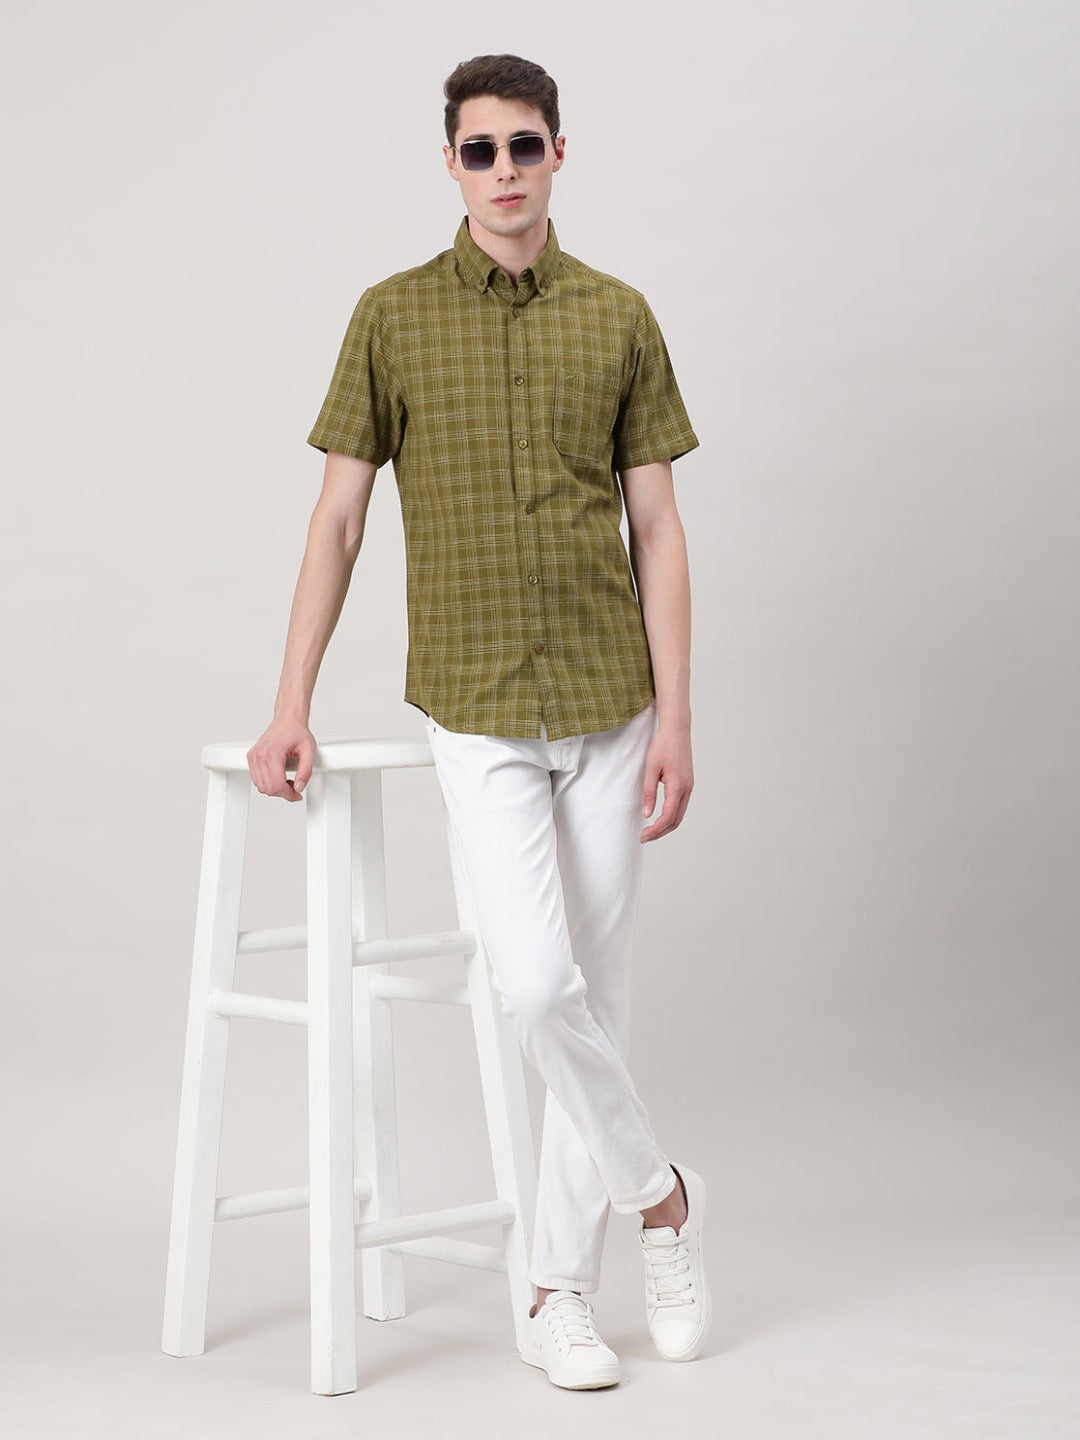 Crocodile Casual Half Sleeve Comfort Fit Checks Shirt Olive with Collar